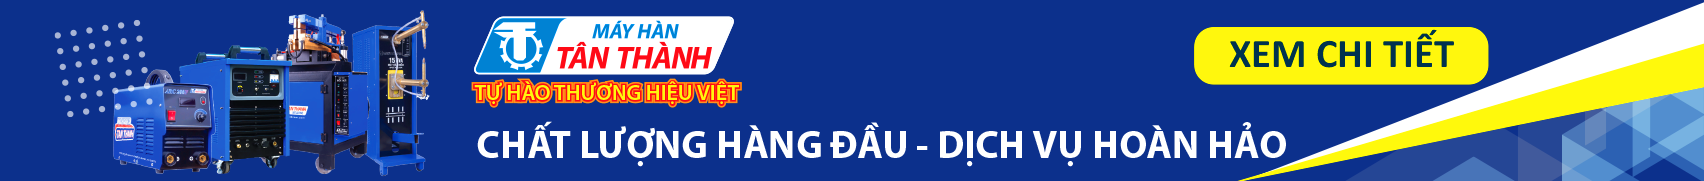 banner tong hop